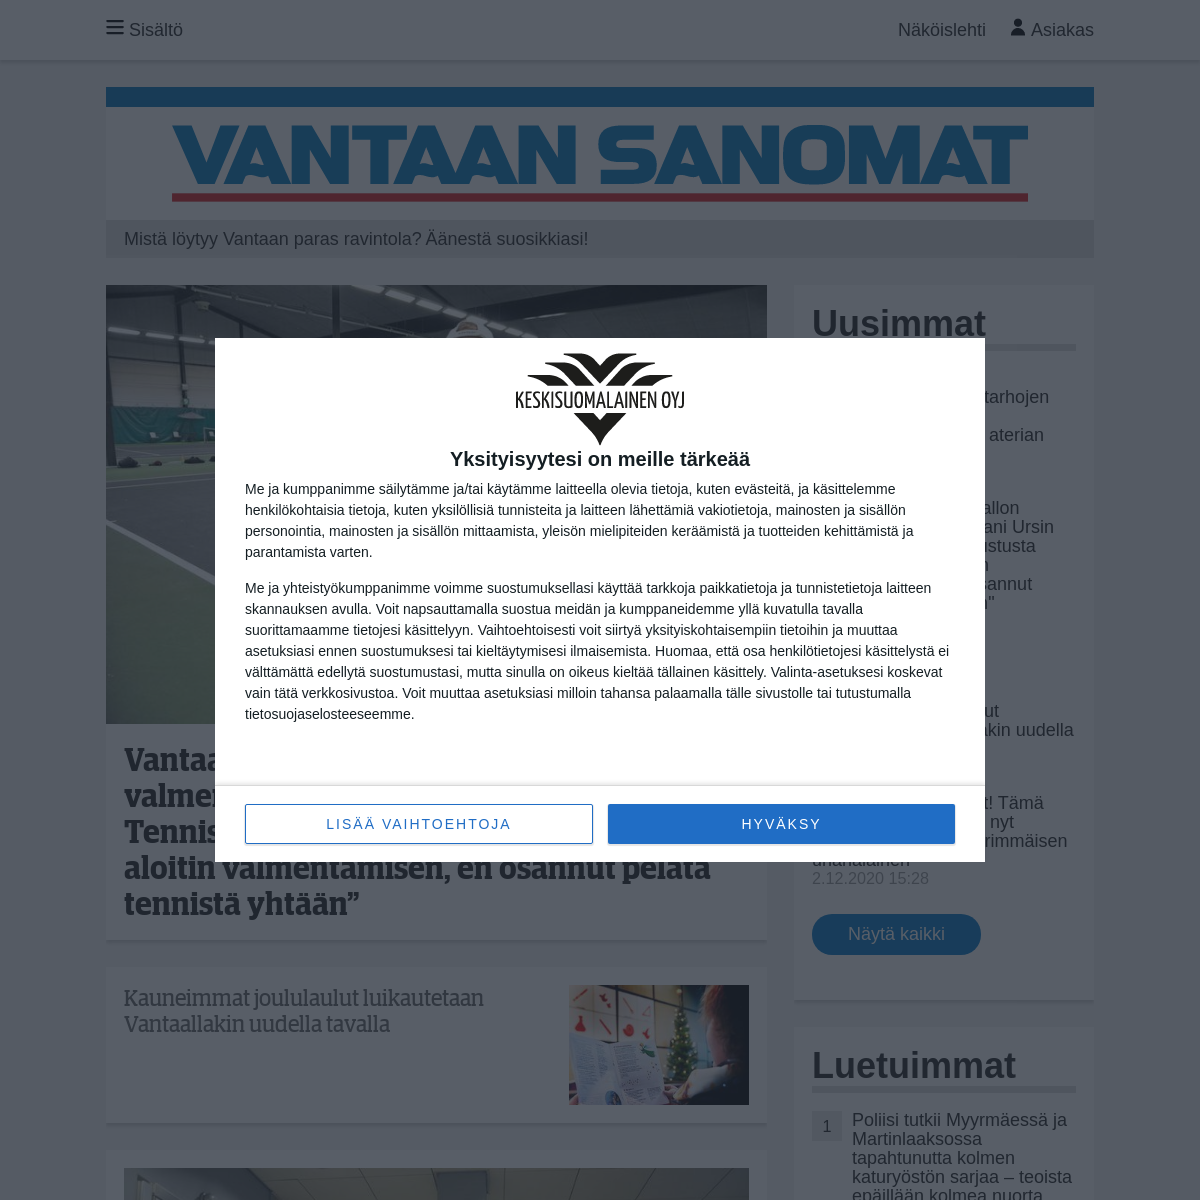 A complete backup of vantaansanomat.fi